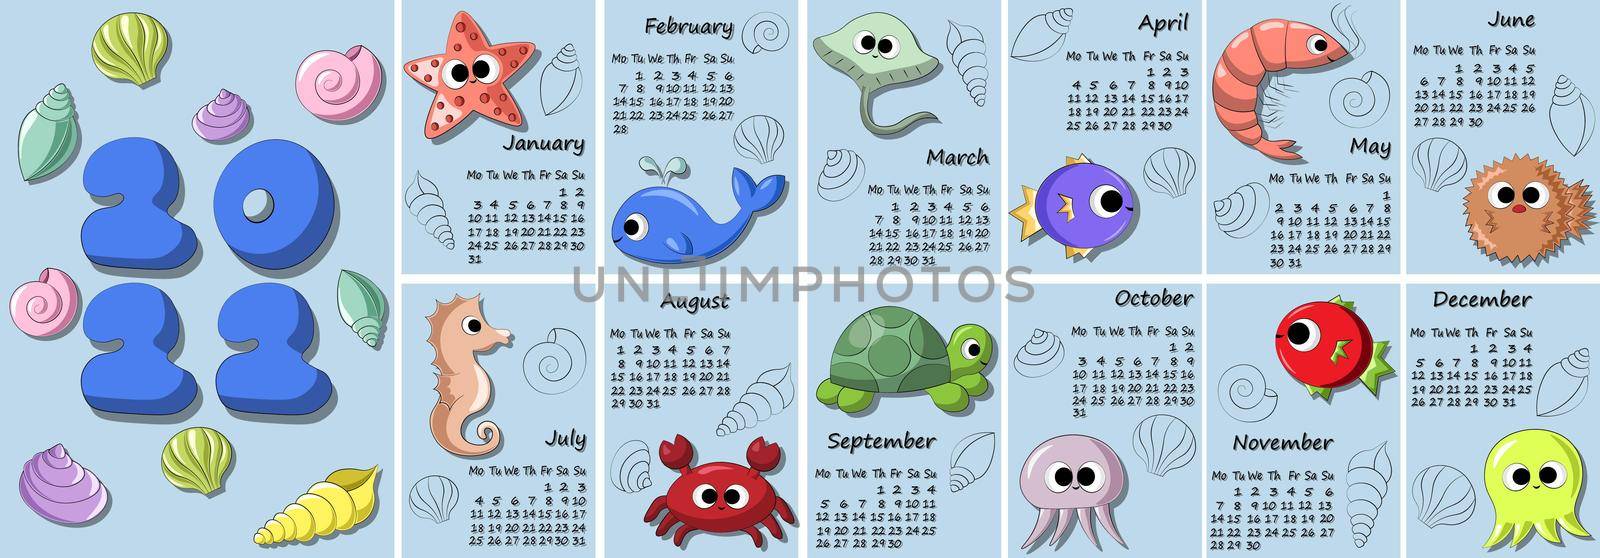 Calendar for 2022 with cartoon cute underwater animals by AnastasiaPen